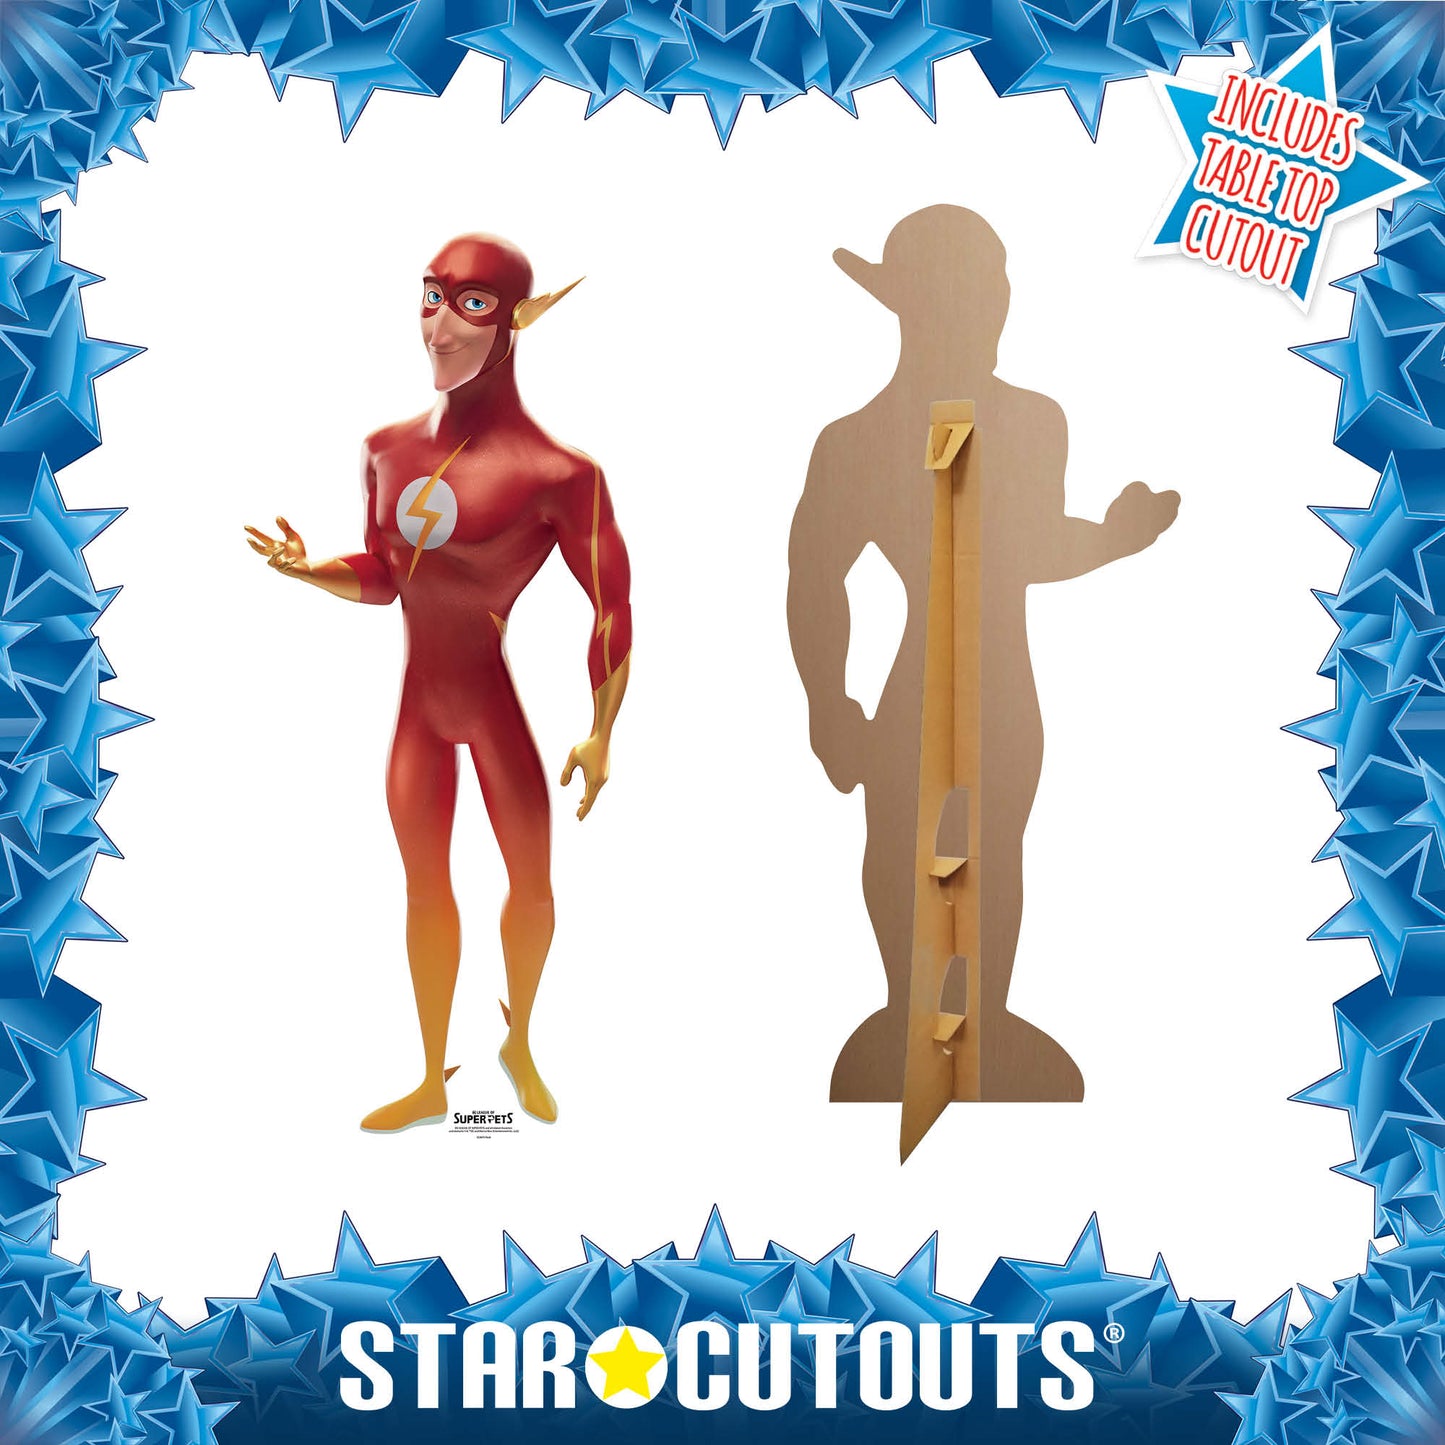 The Flash DC League of Super Pets Cardboard Cutout